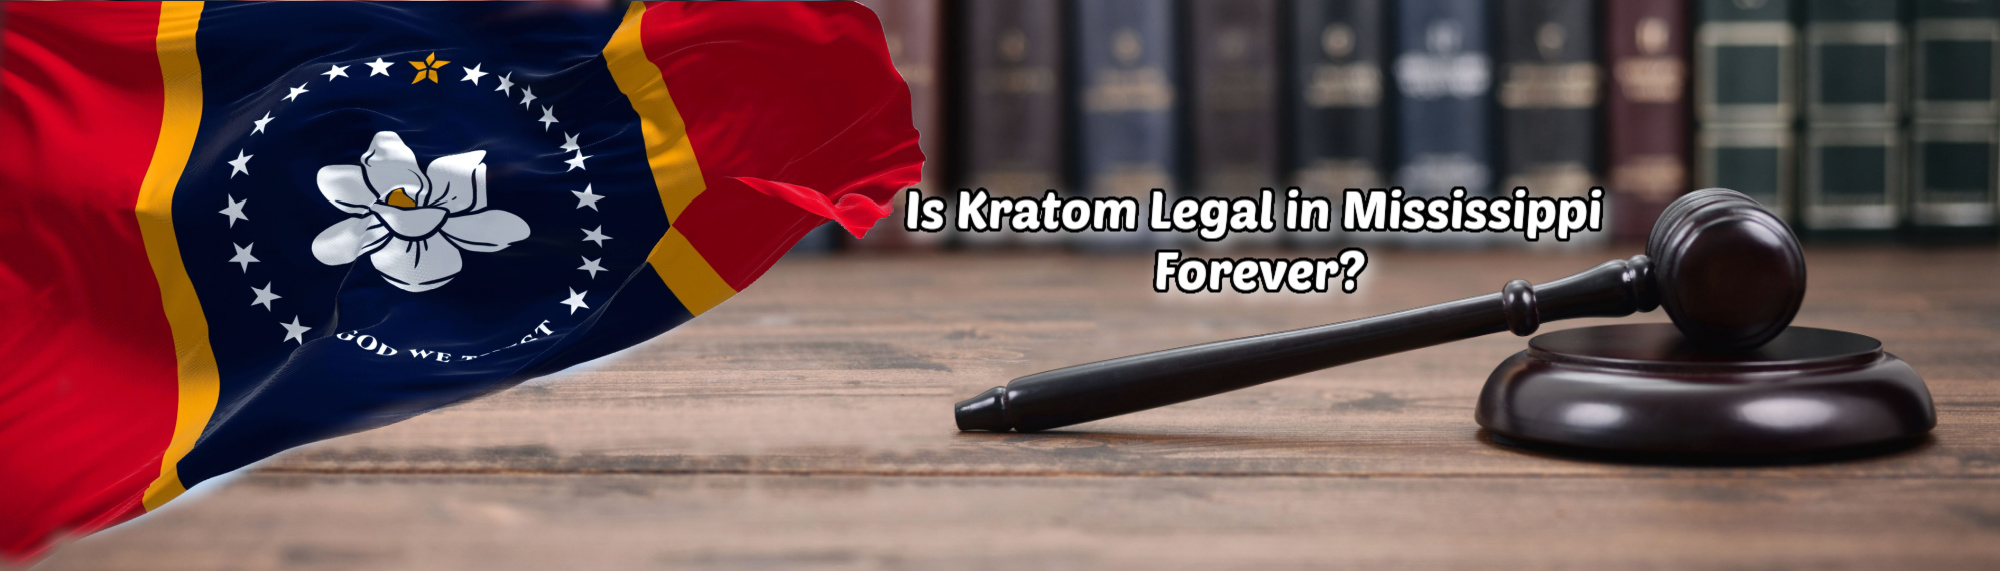 image of is kratom legal in mississippi forever